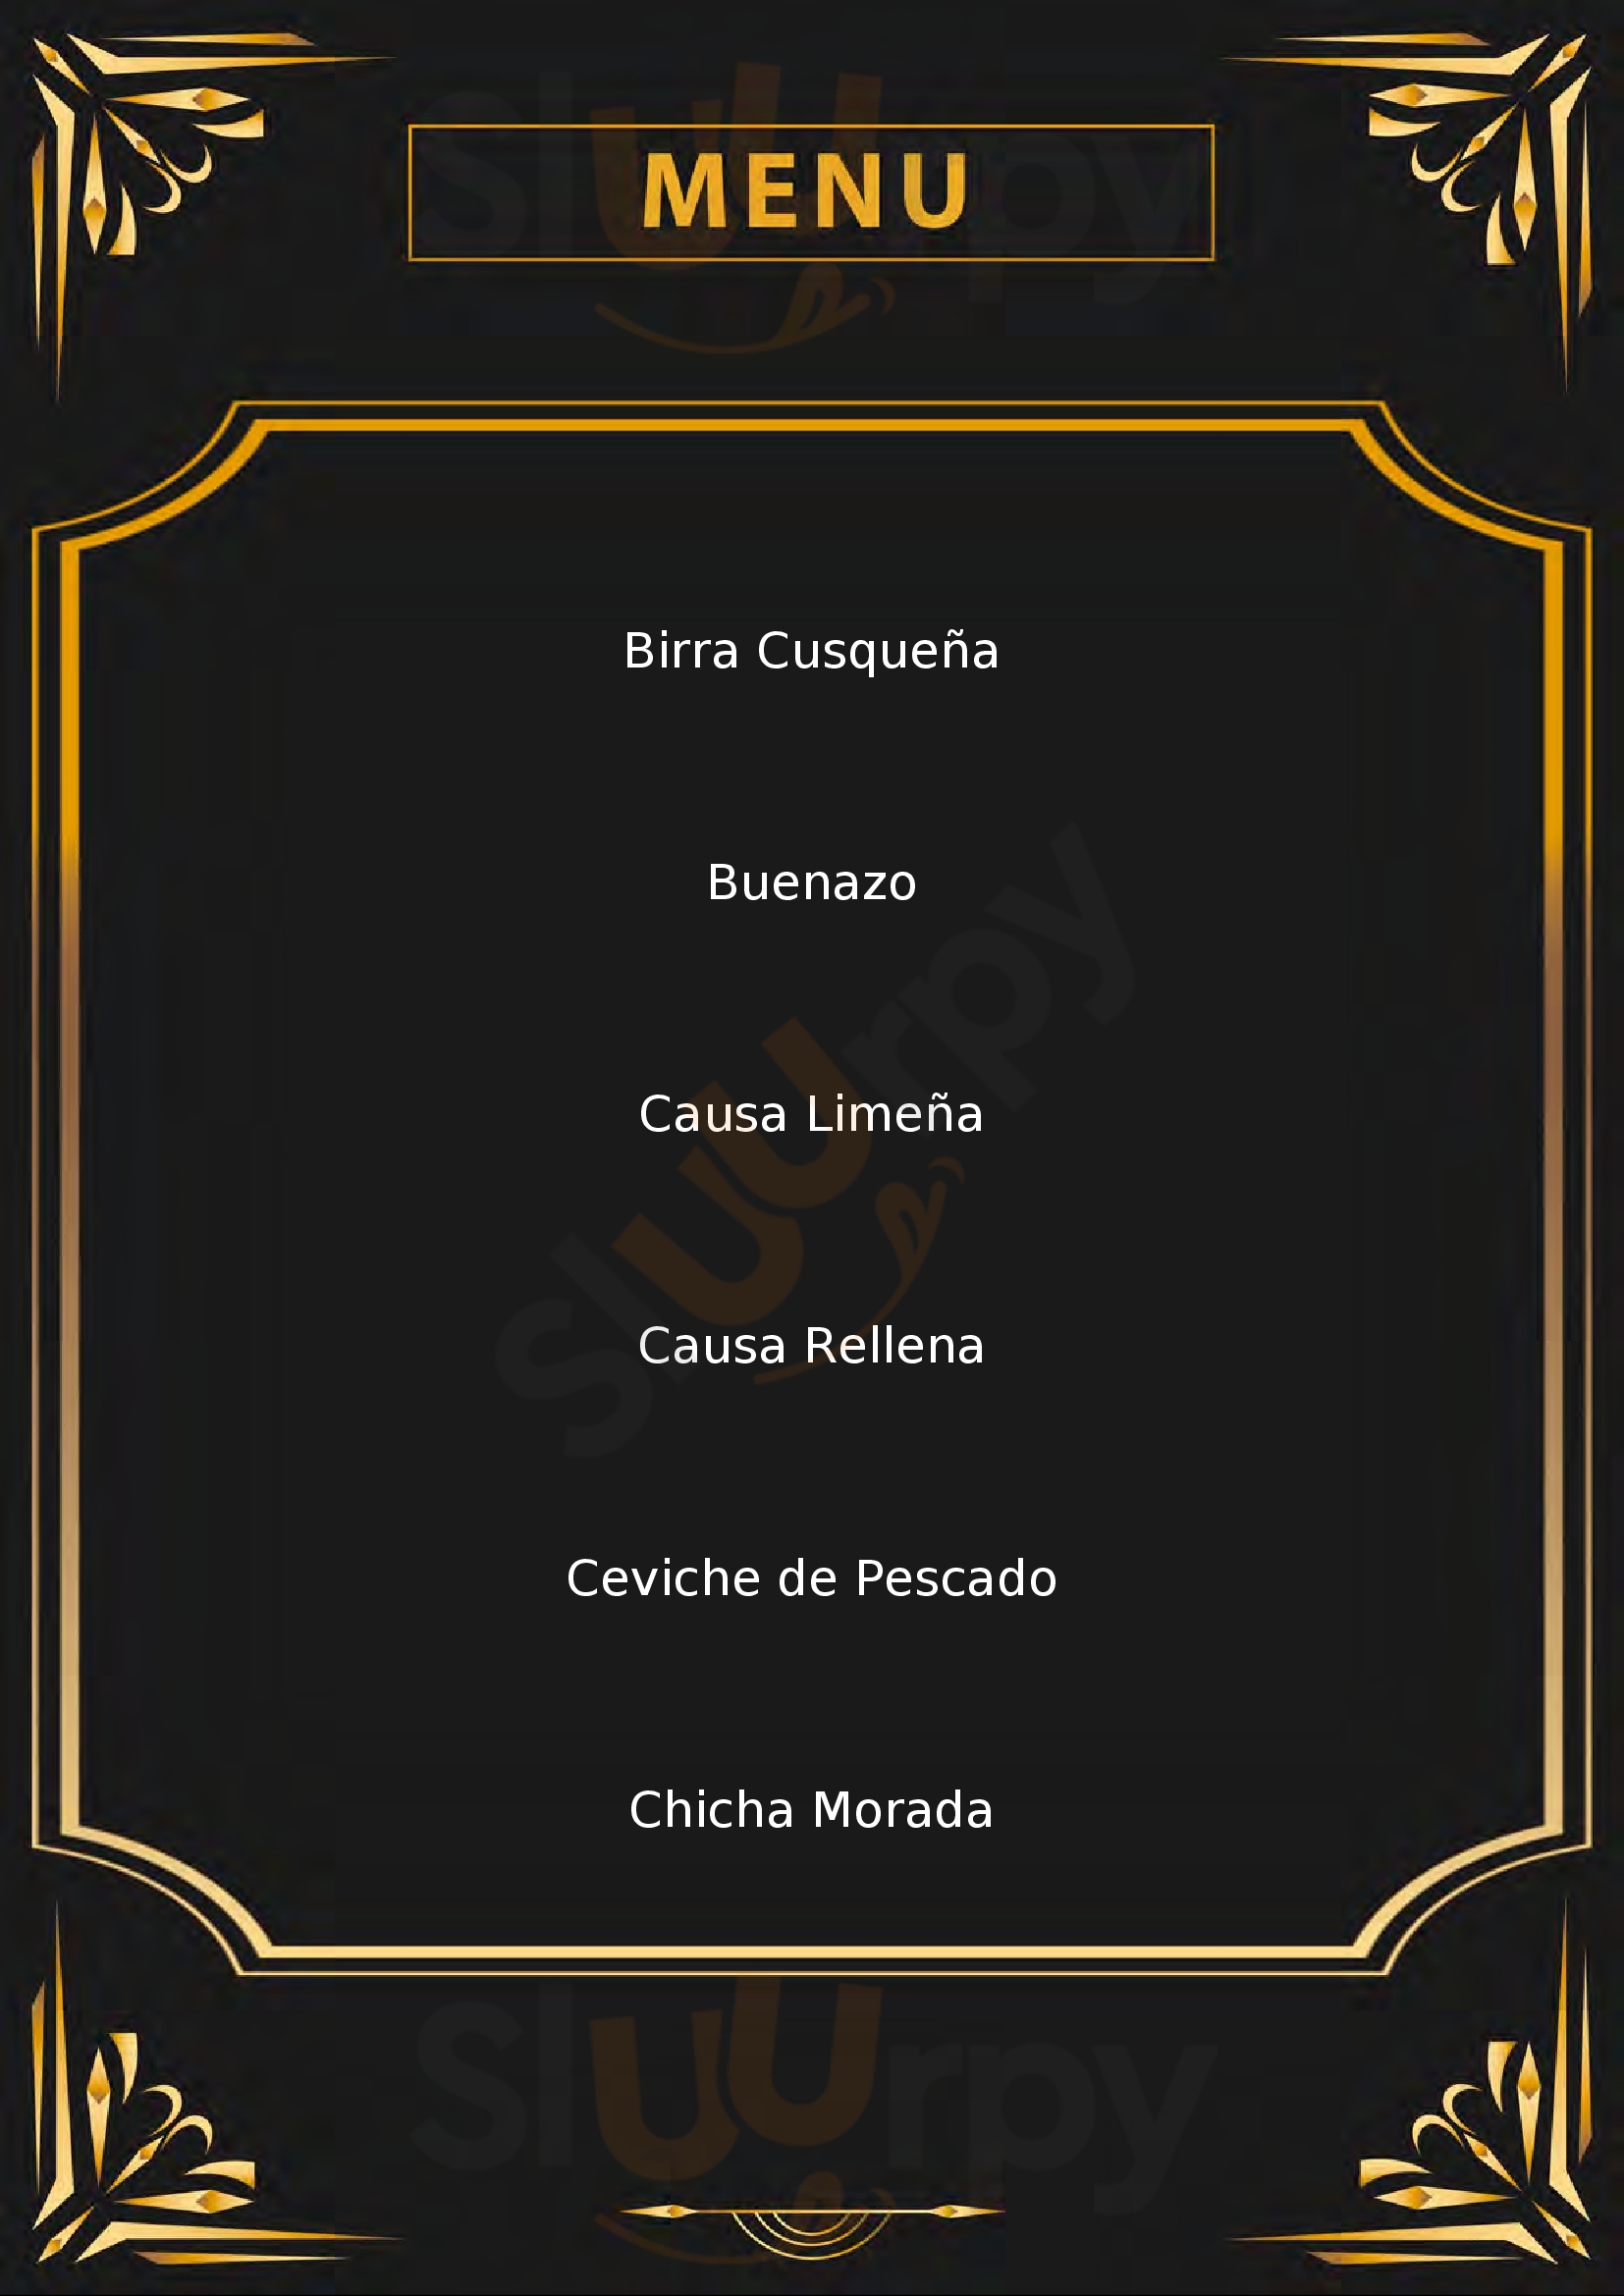 Cusco Cucina Peruviana Bologna menù 1 pagina